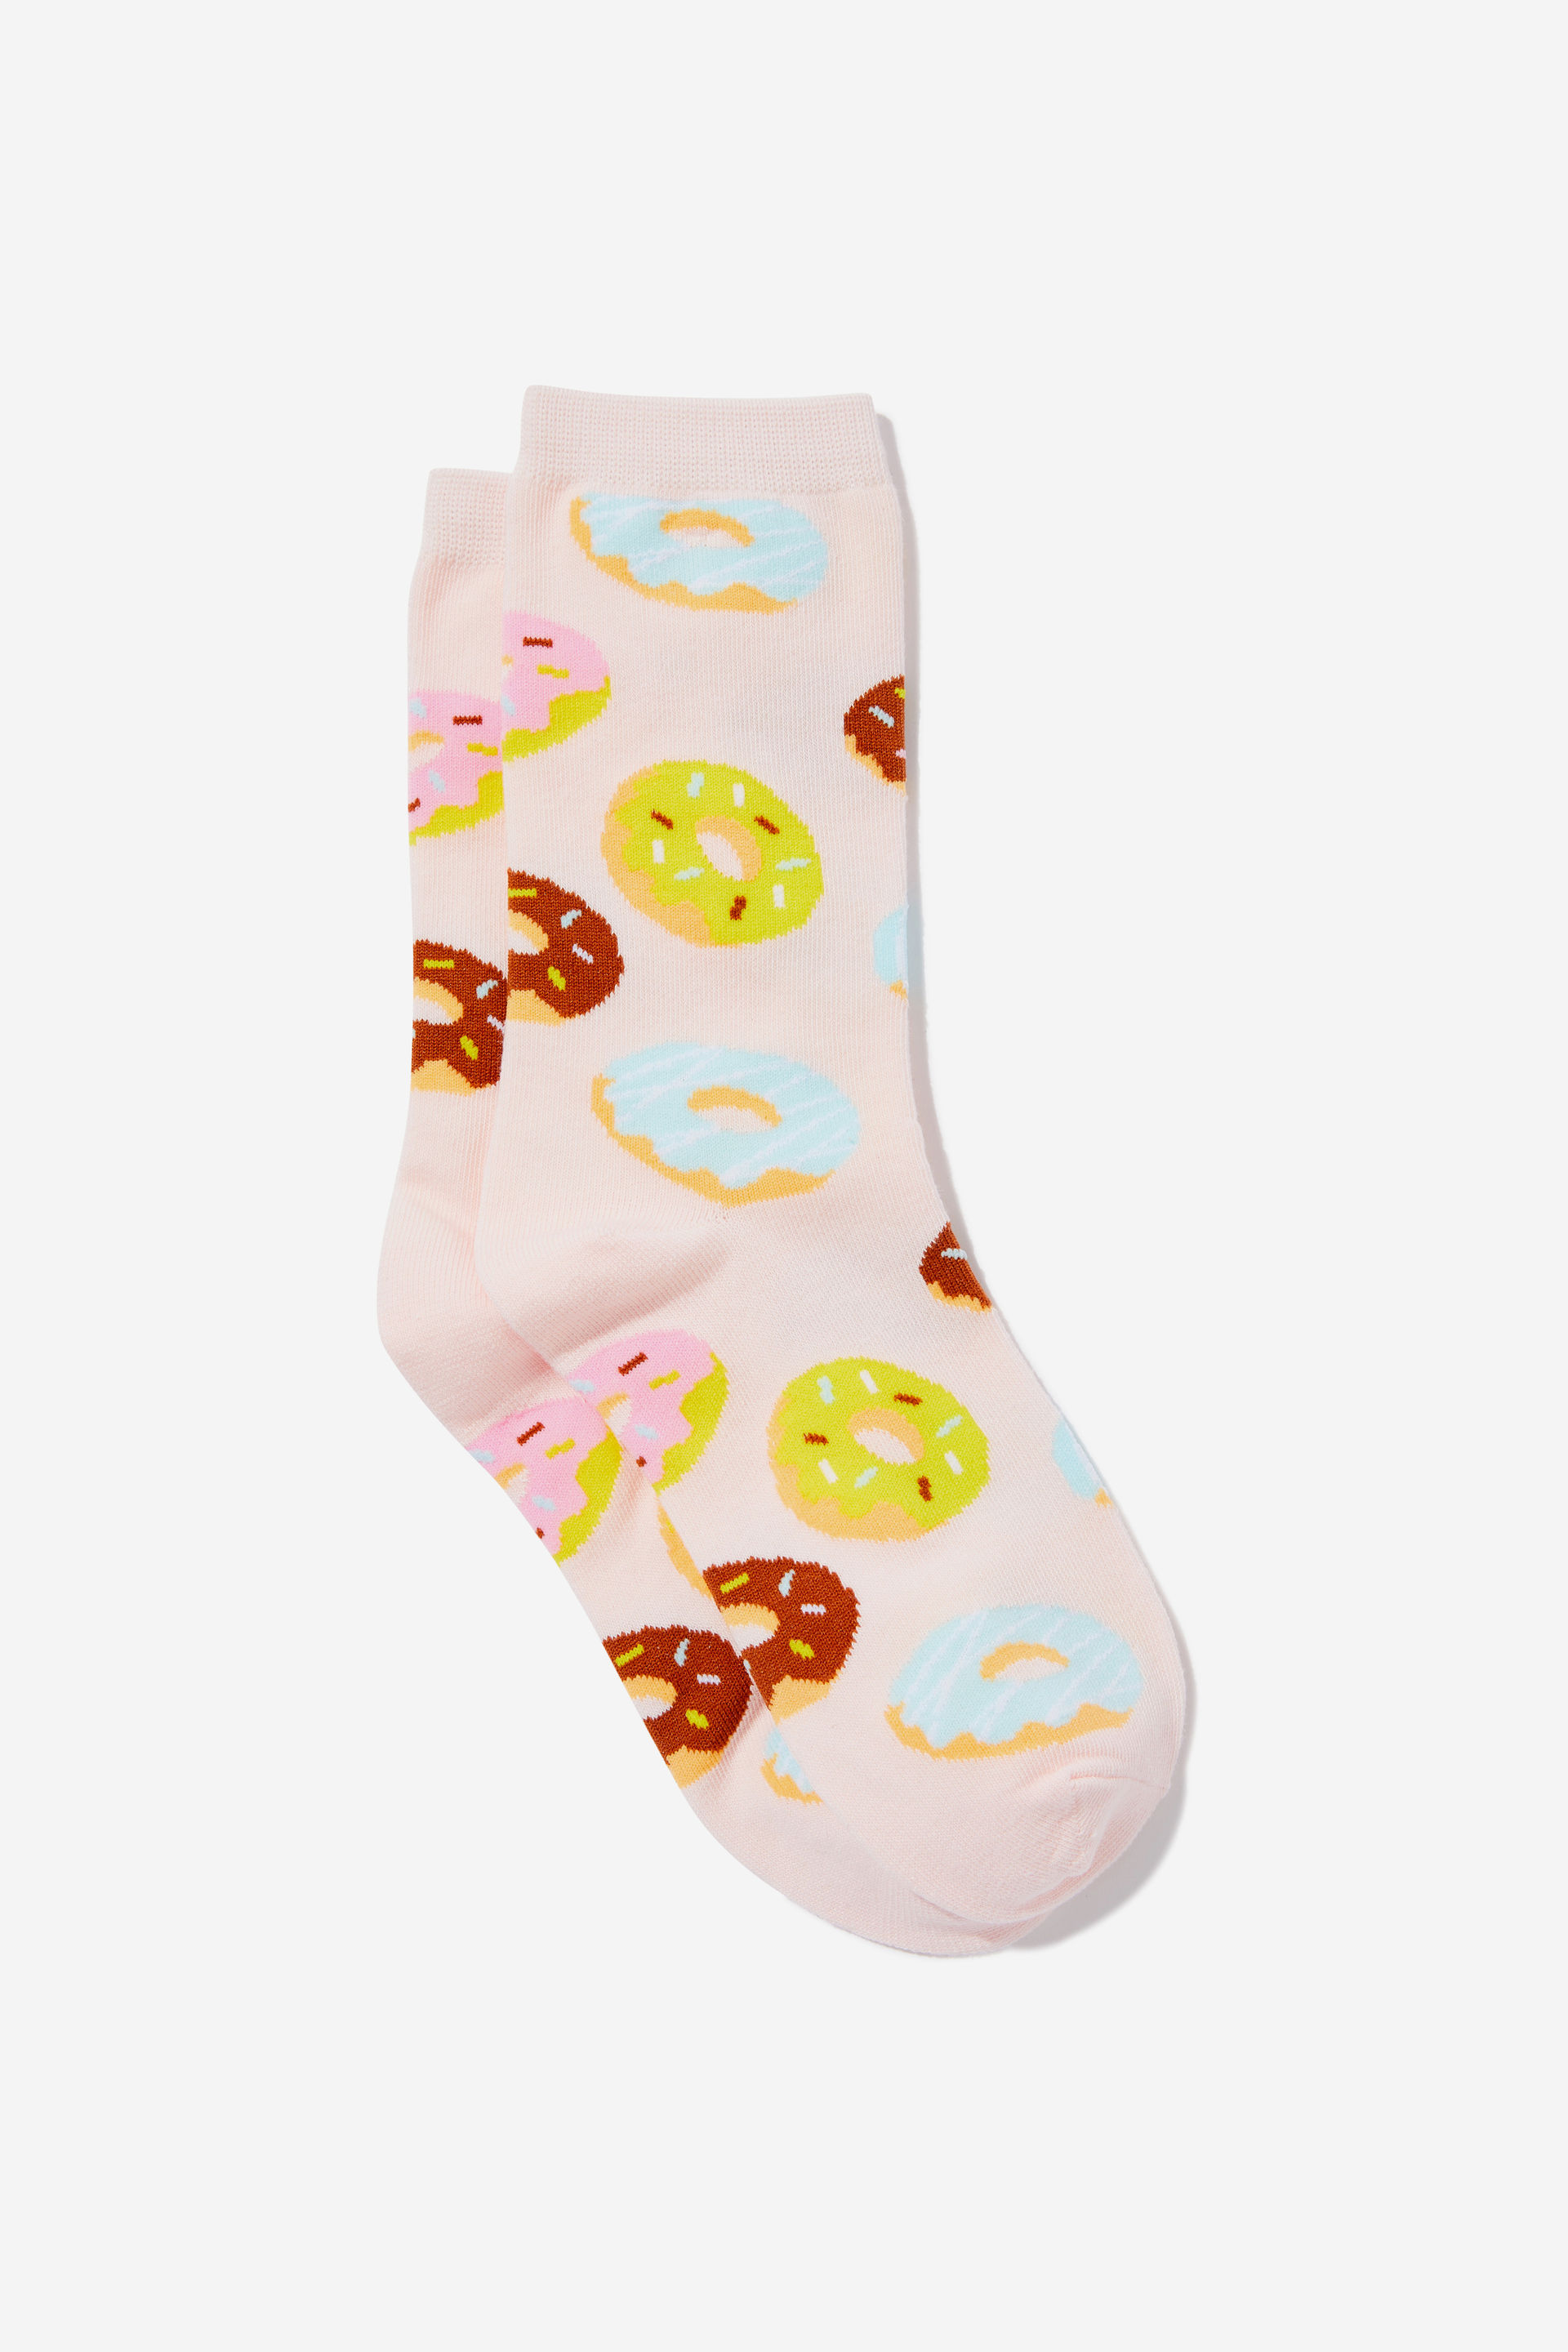 Typo - Socks - Donuts multi pink